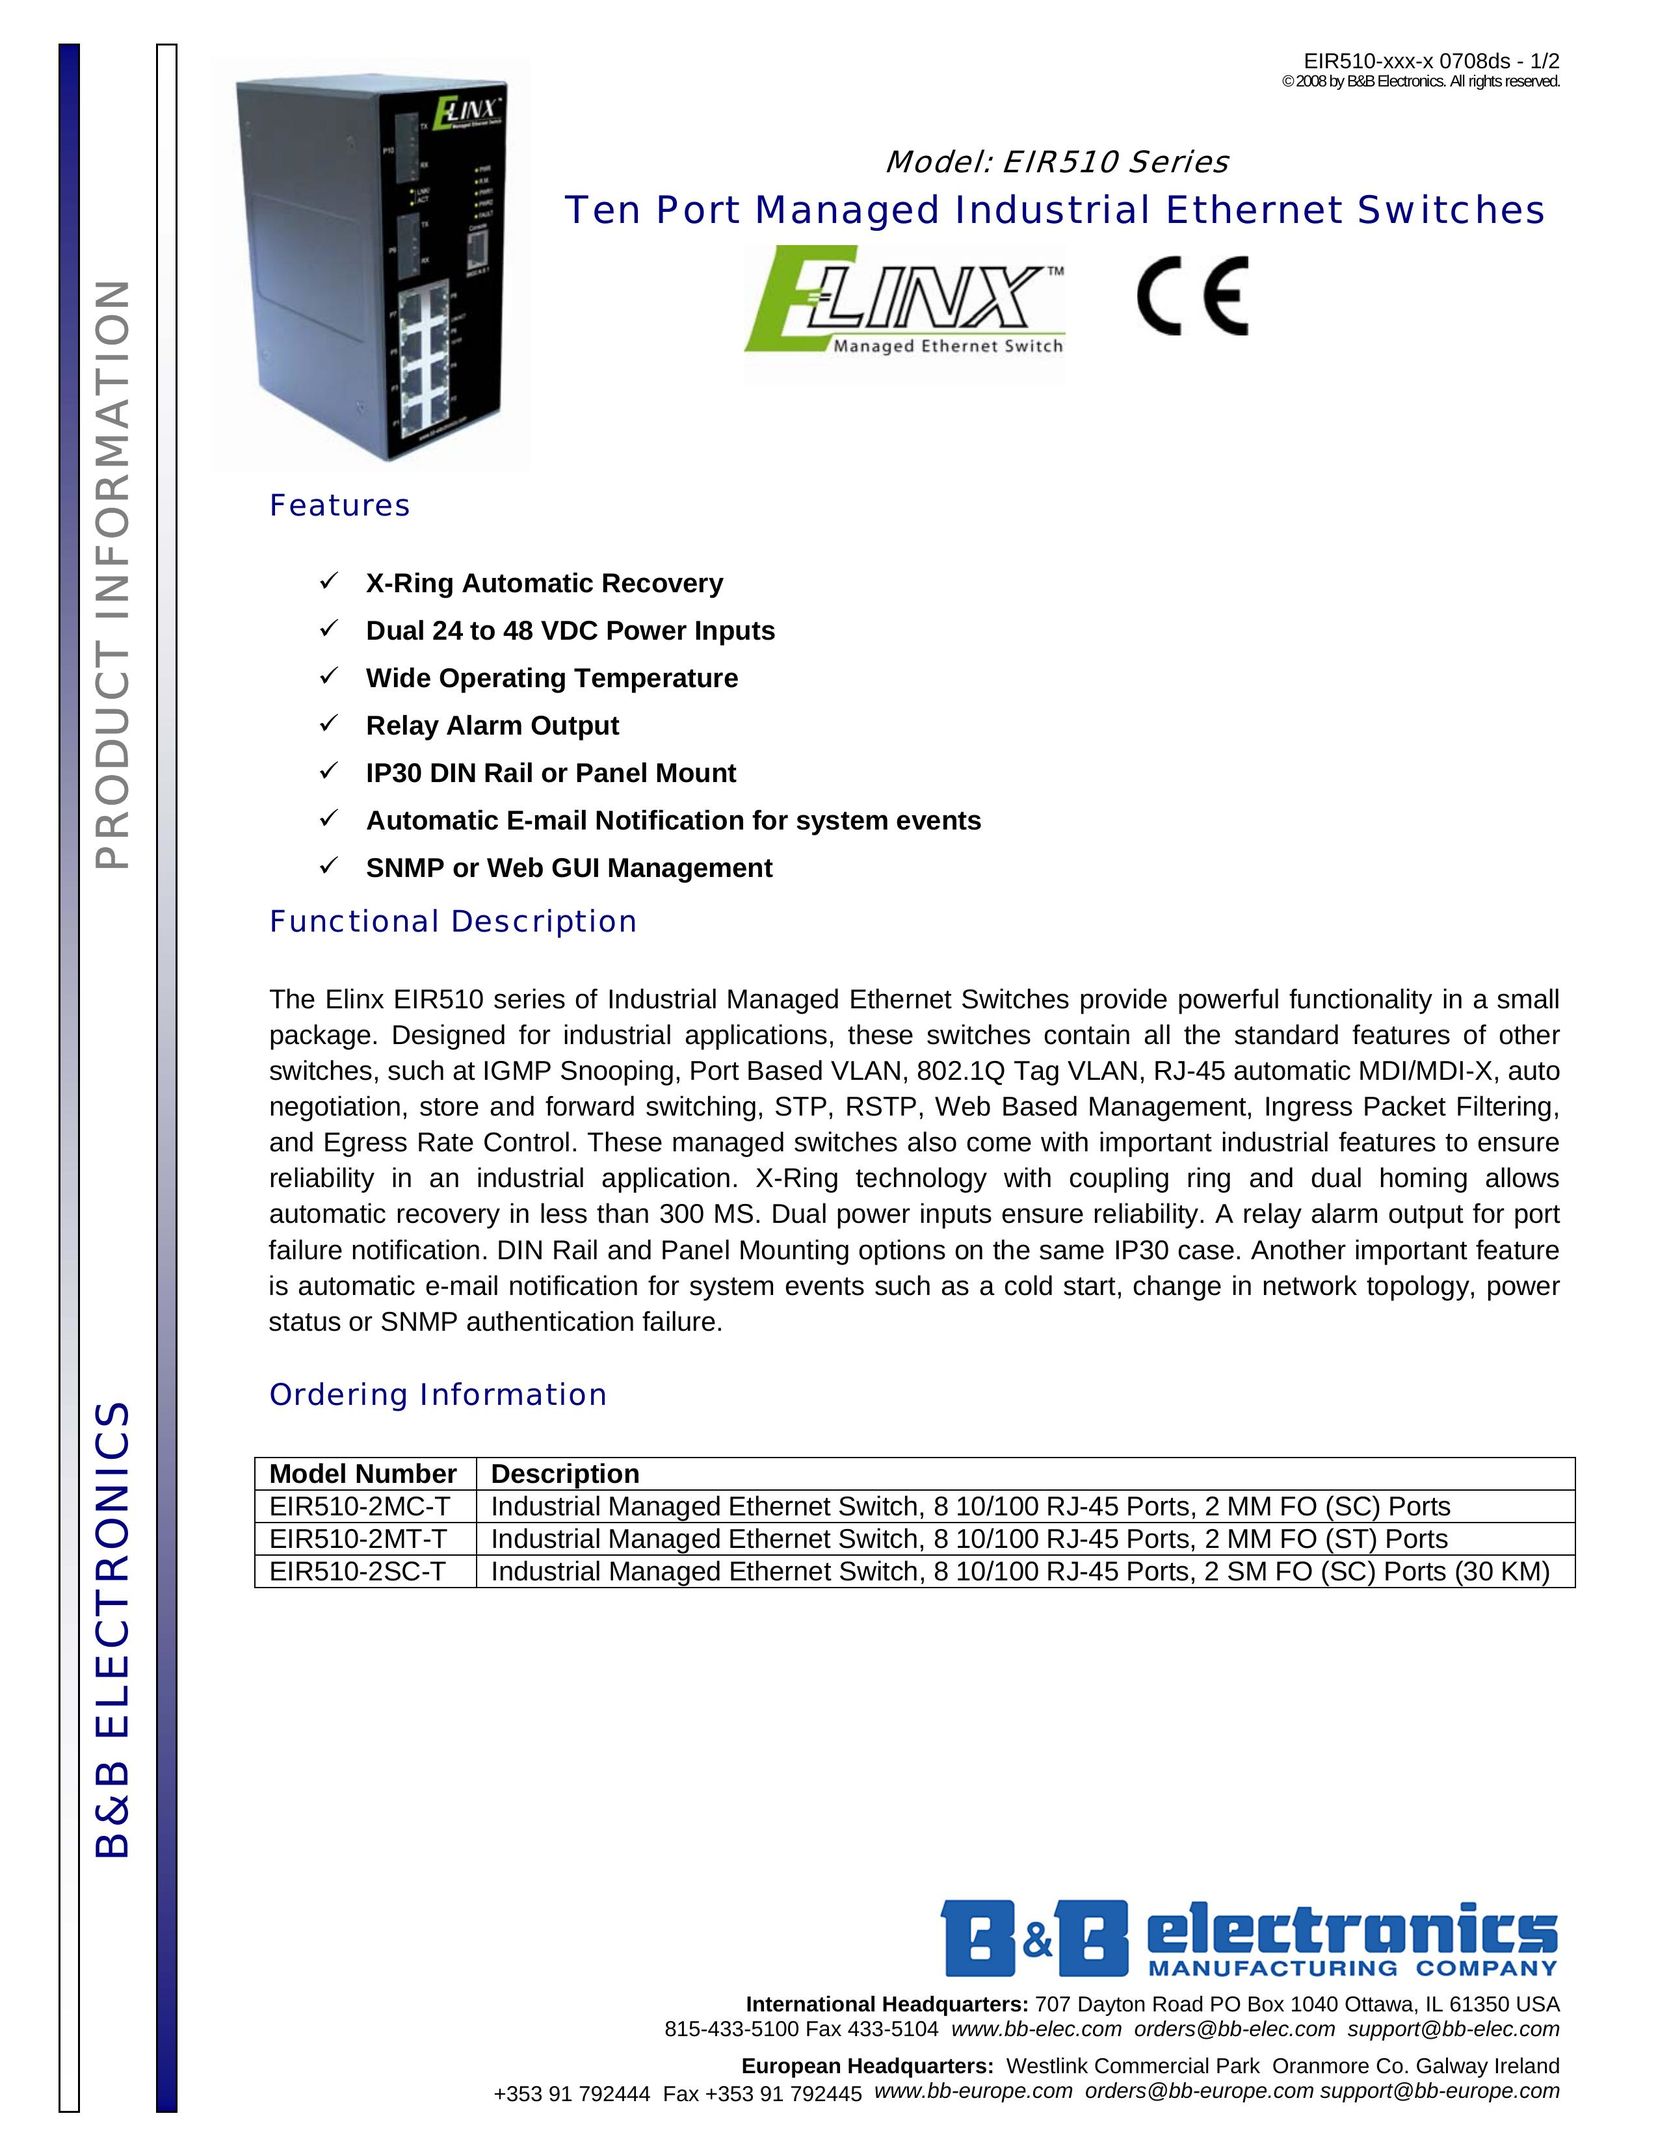 B&B Electronics EIR510-2SC-T Switch User Manual